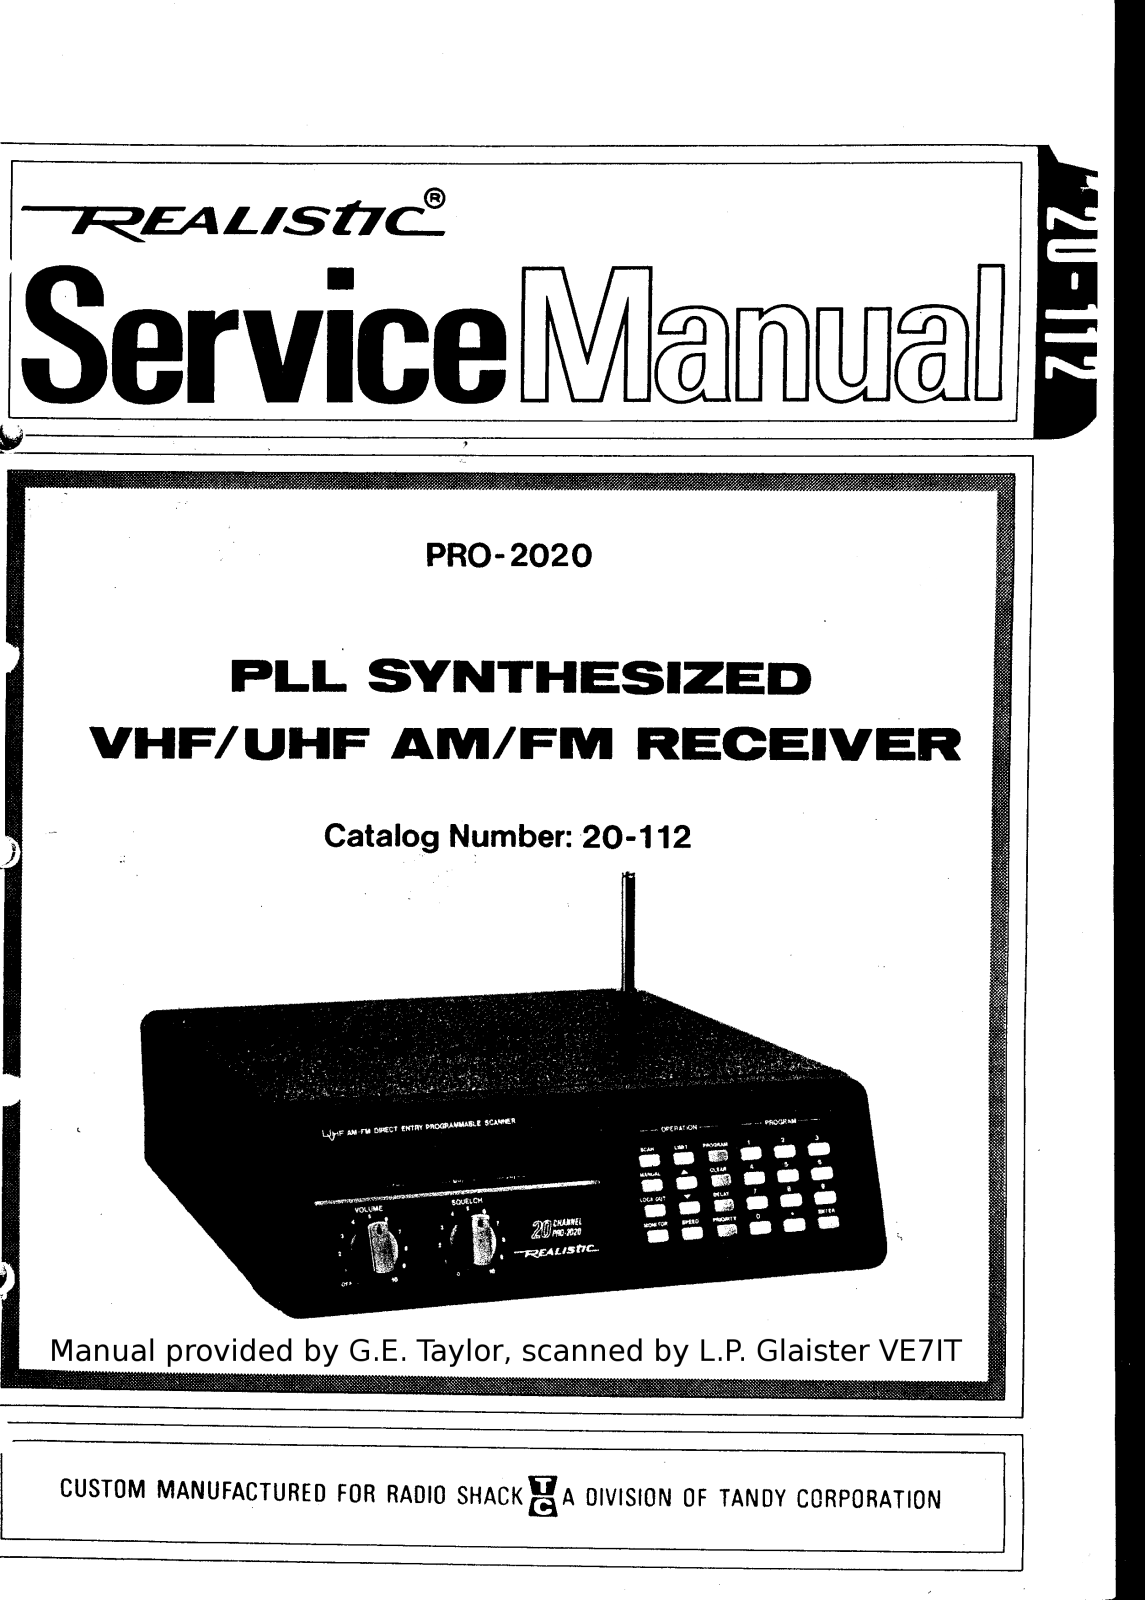 RadioShack PRO-2020 Service Manual